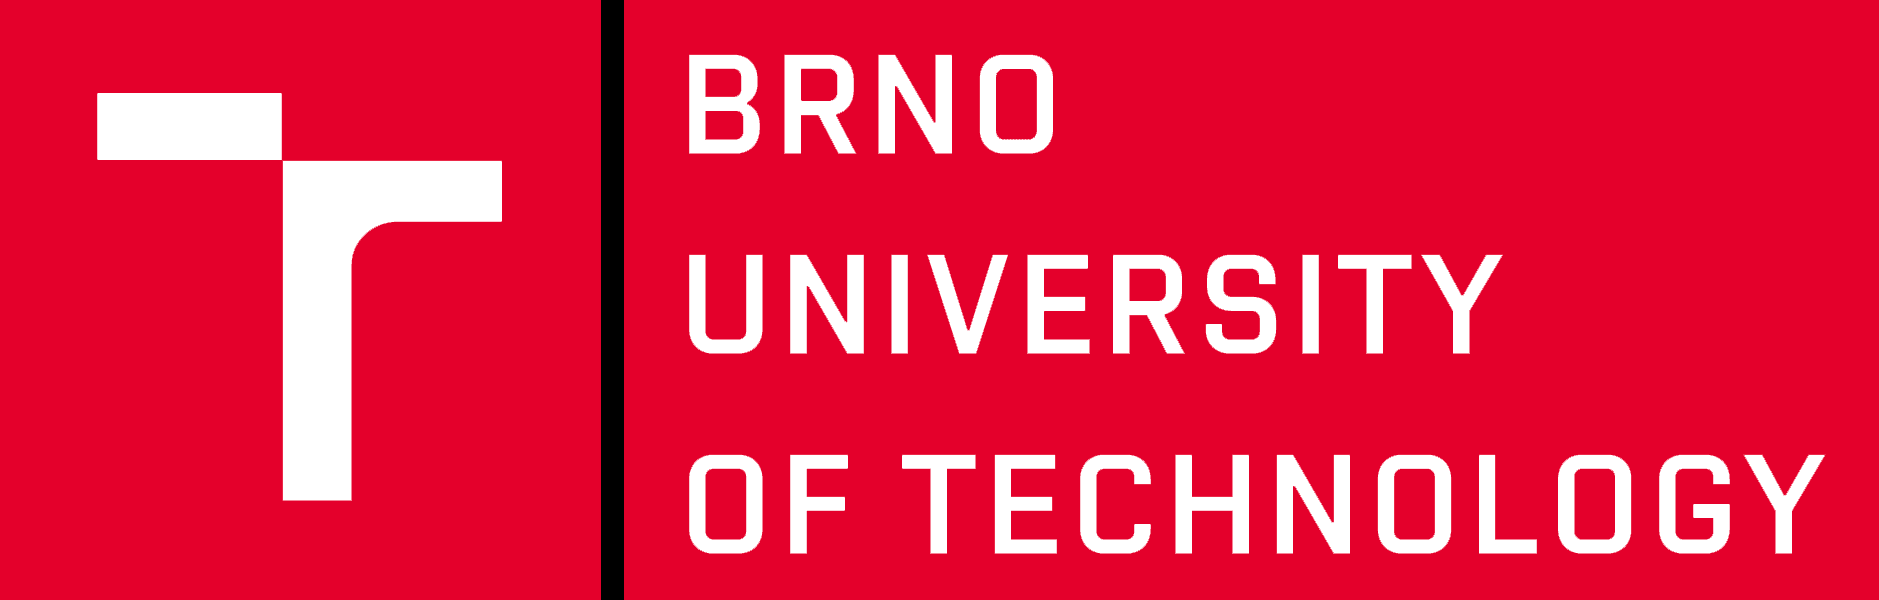 Brno University of Technology in Czech Republic - Master Degrees